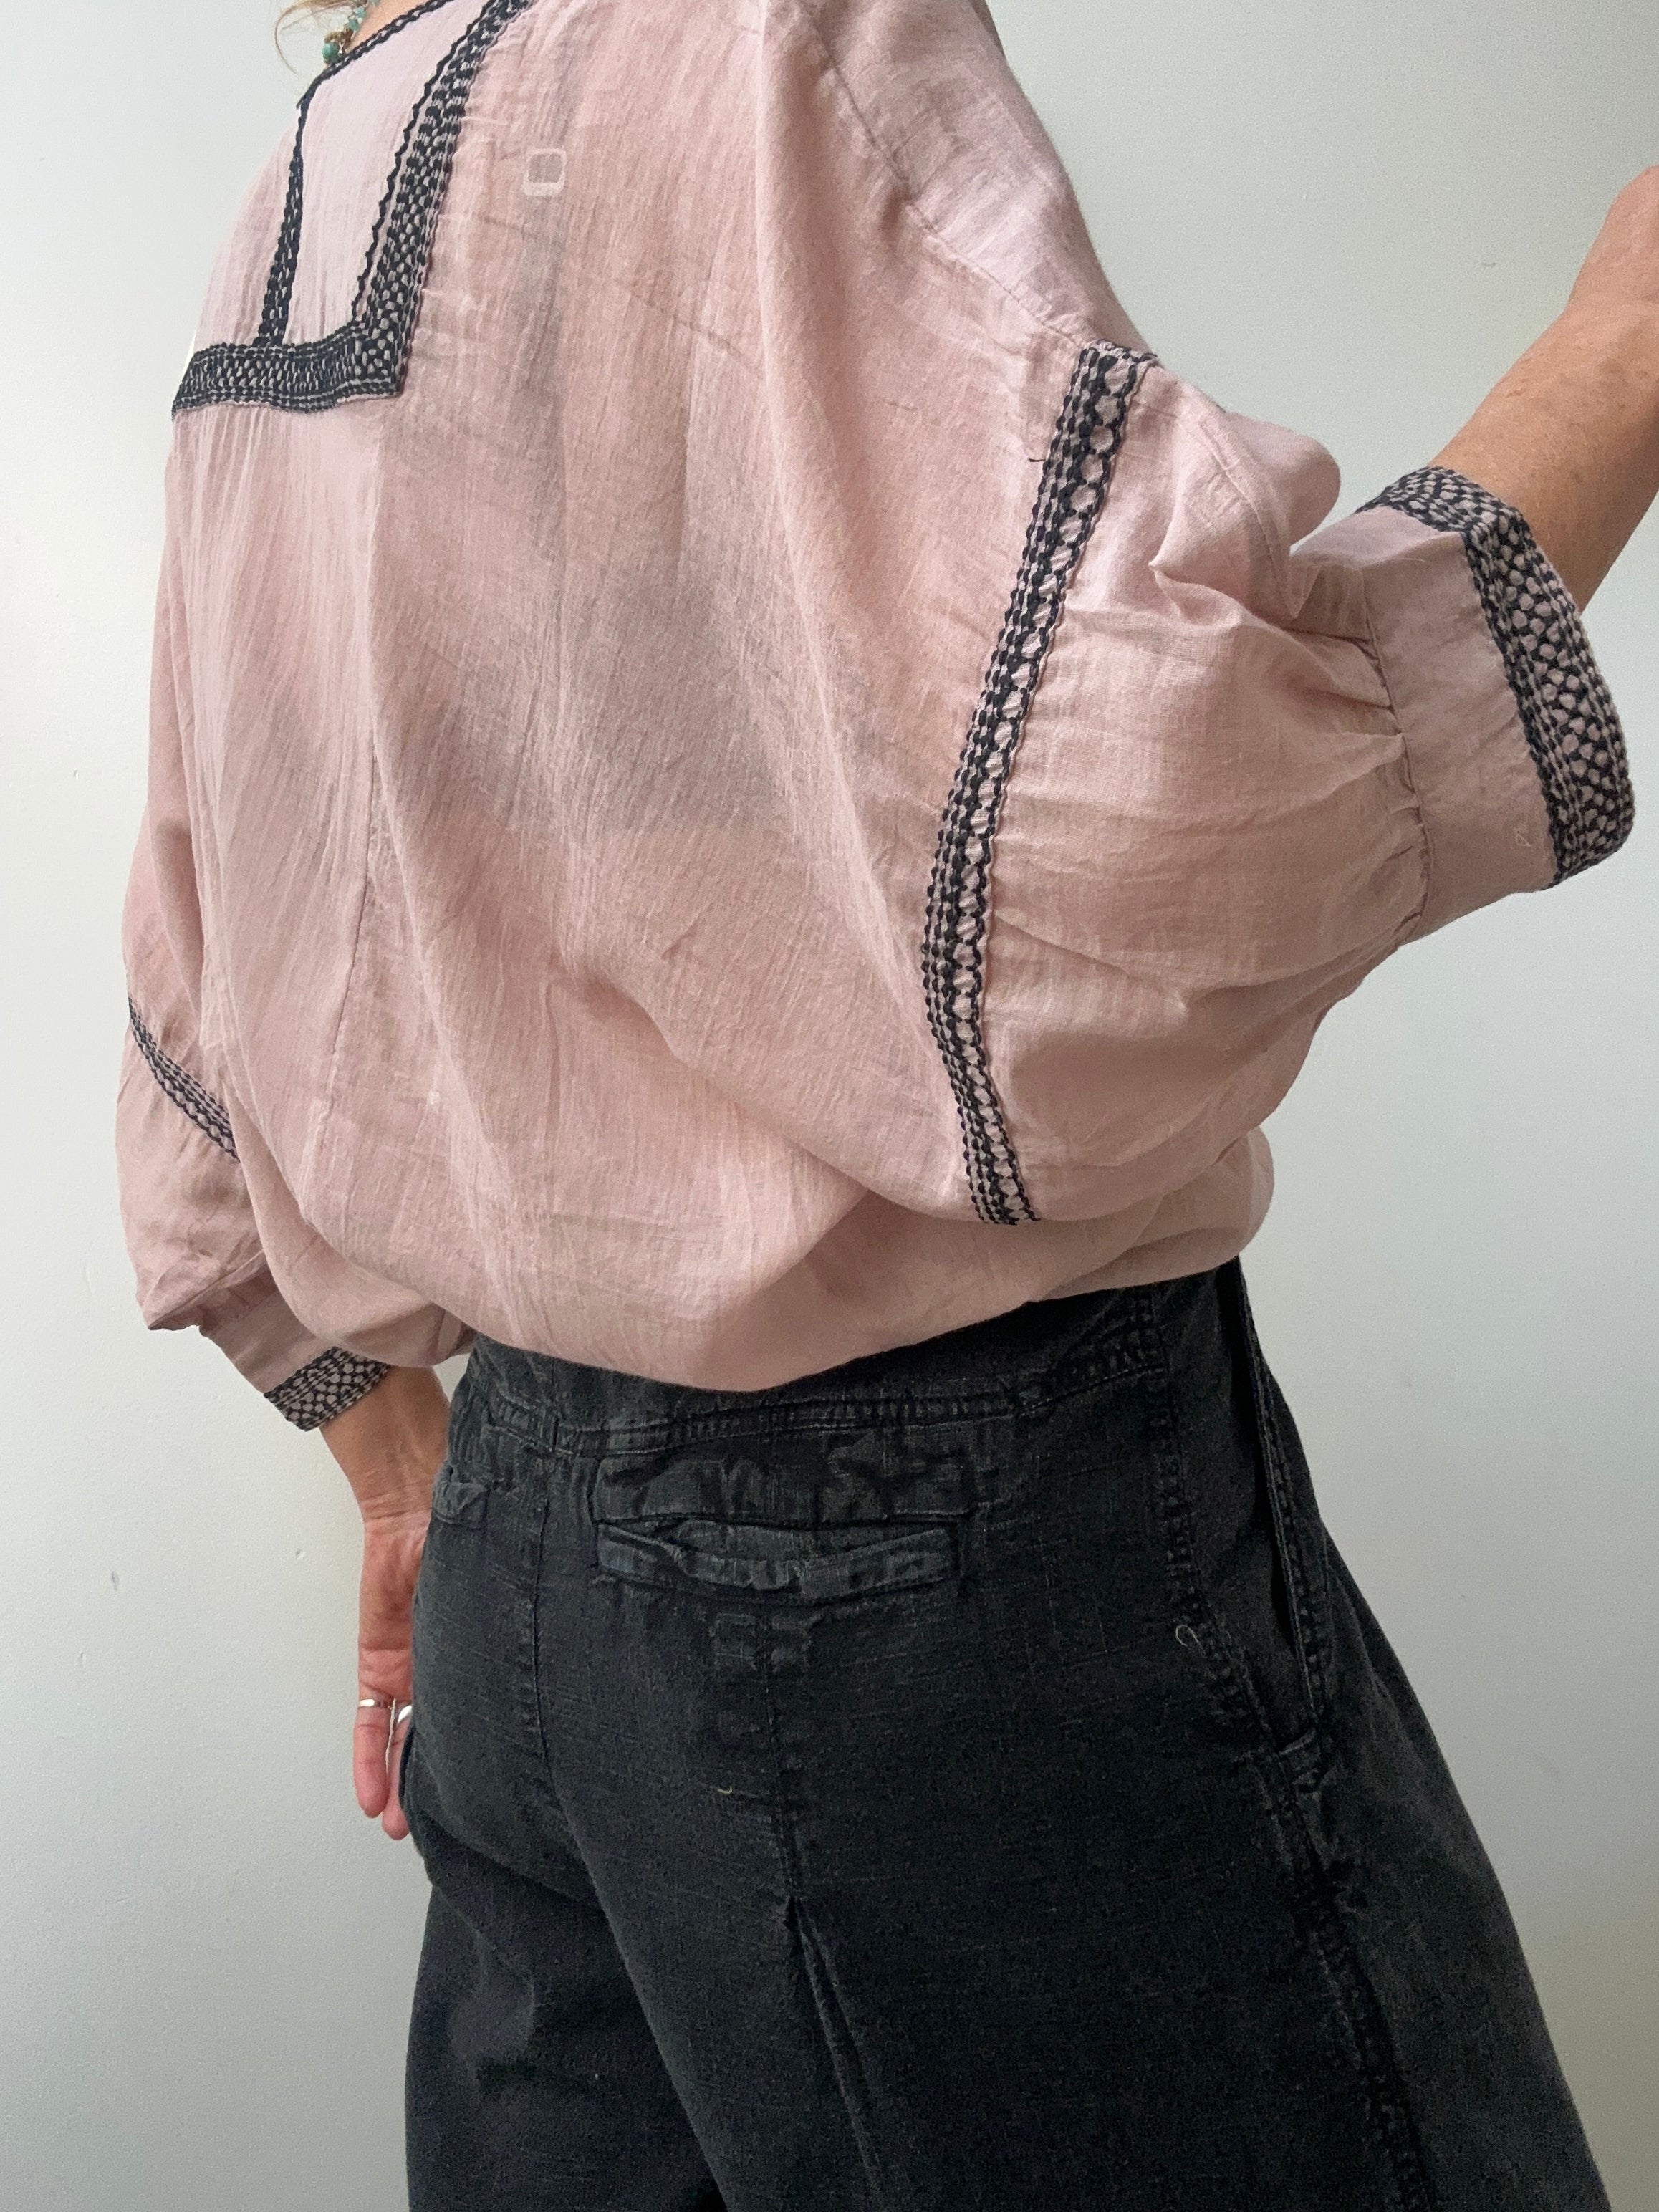 Jetsetbohemian Tops One Size Cotton Bib Blouse in Dusty Pink